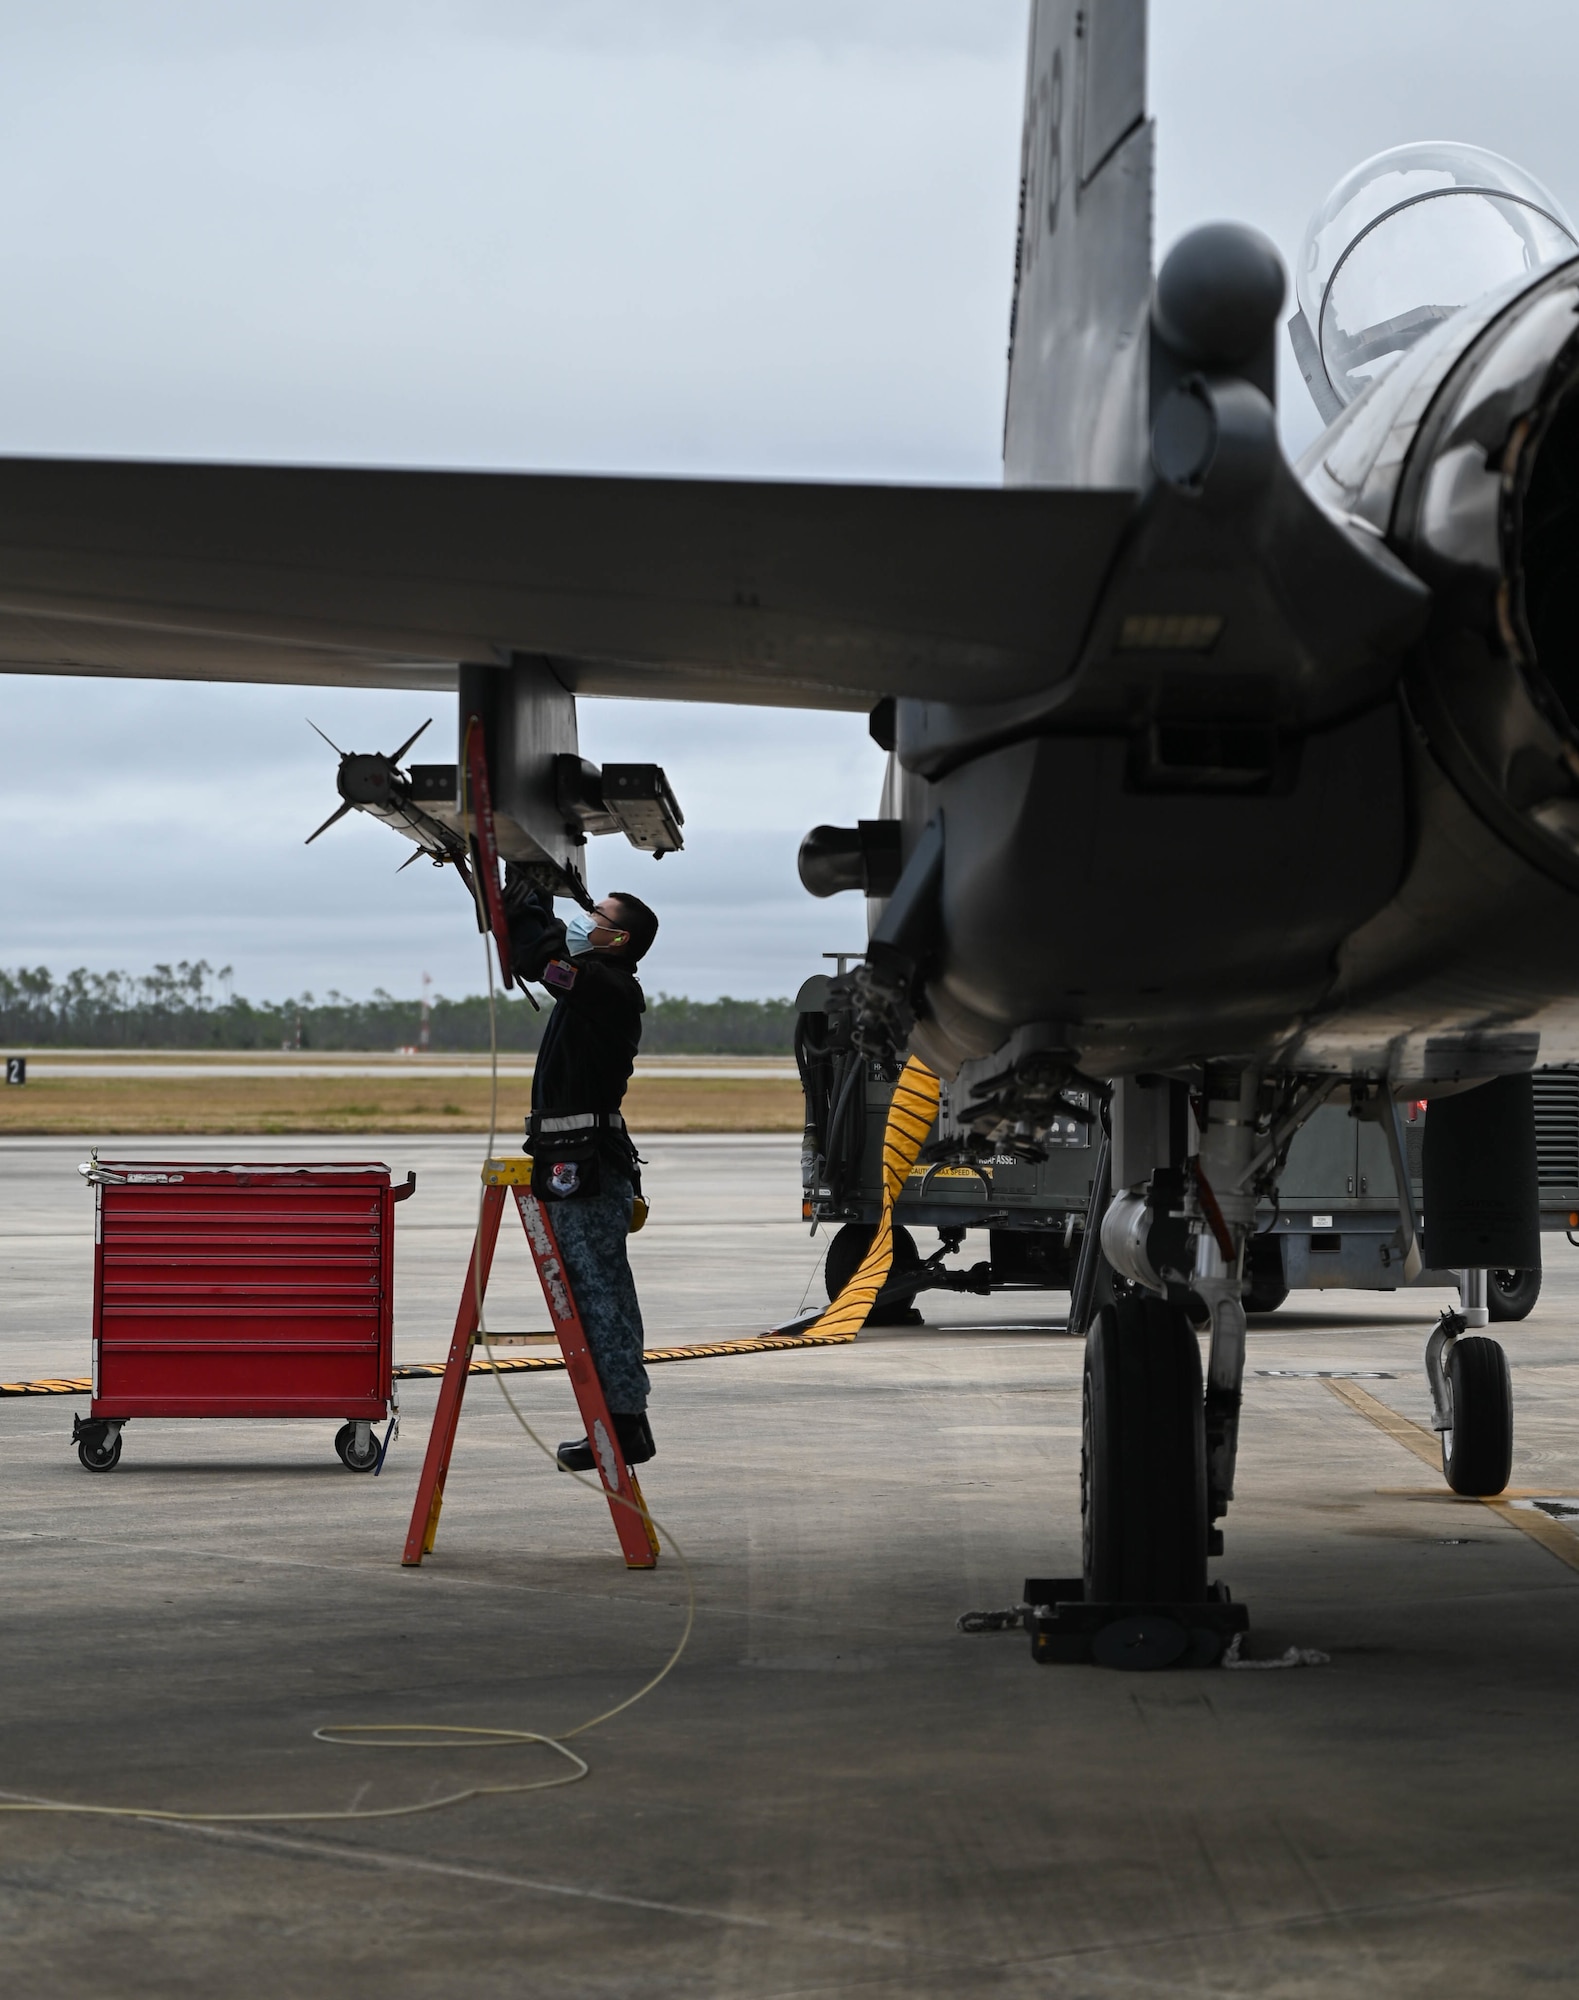 An Airman does an inspection on an aircraft